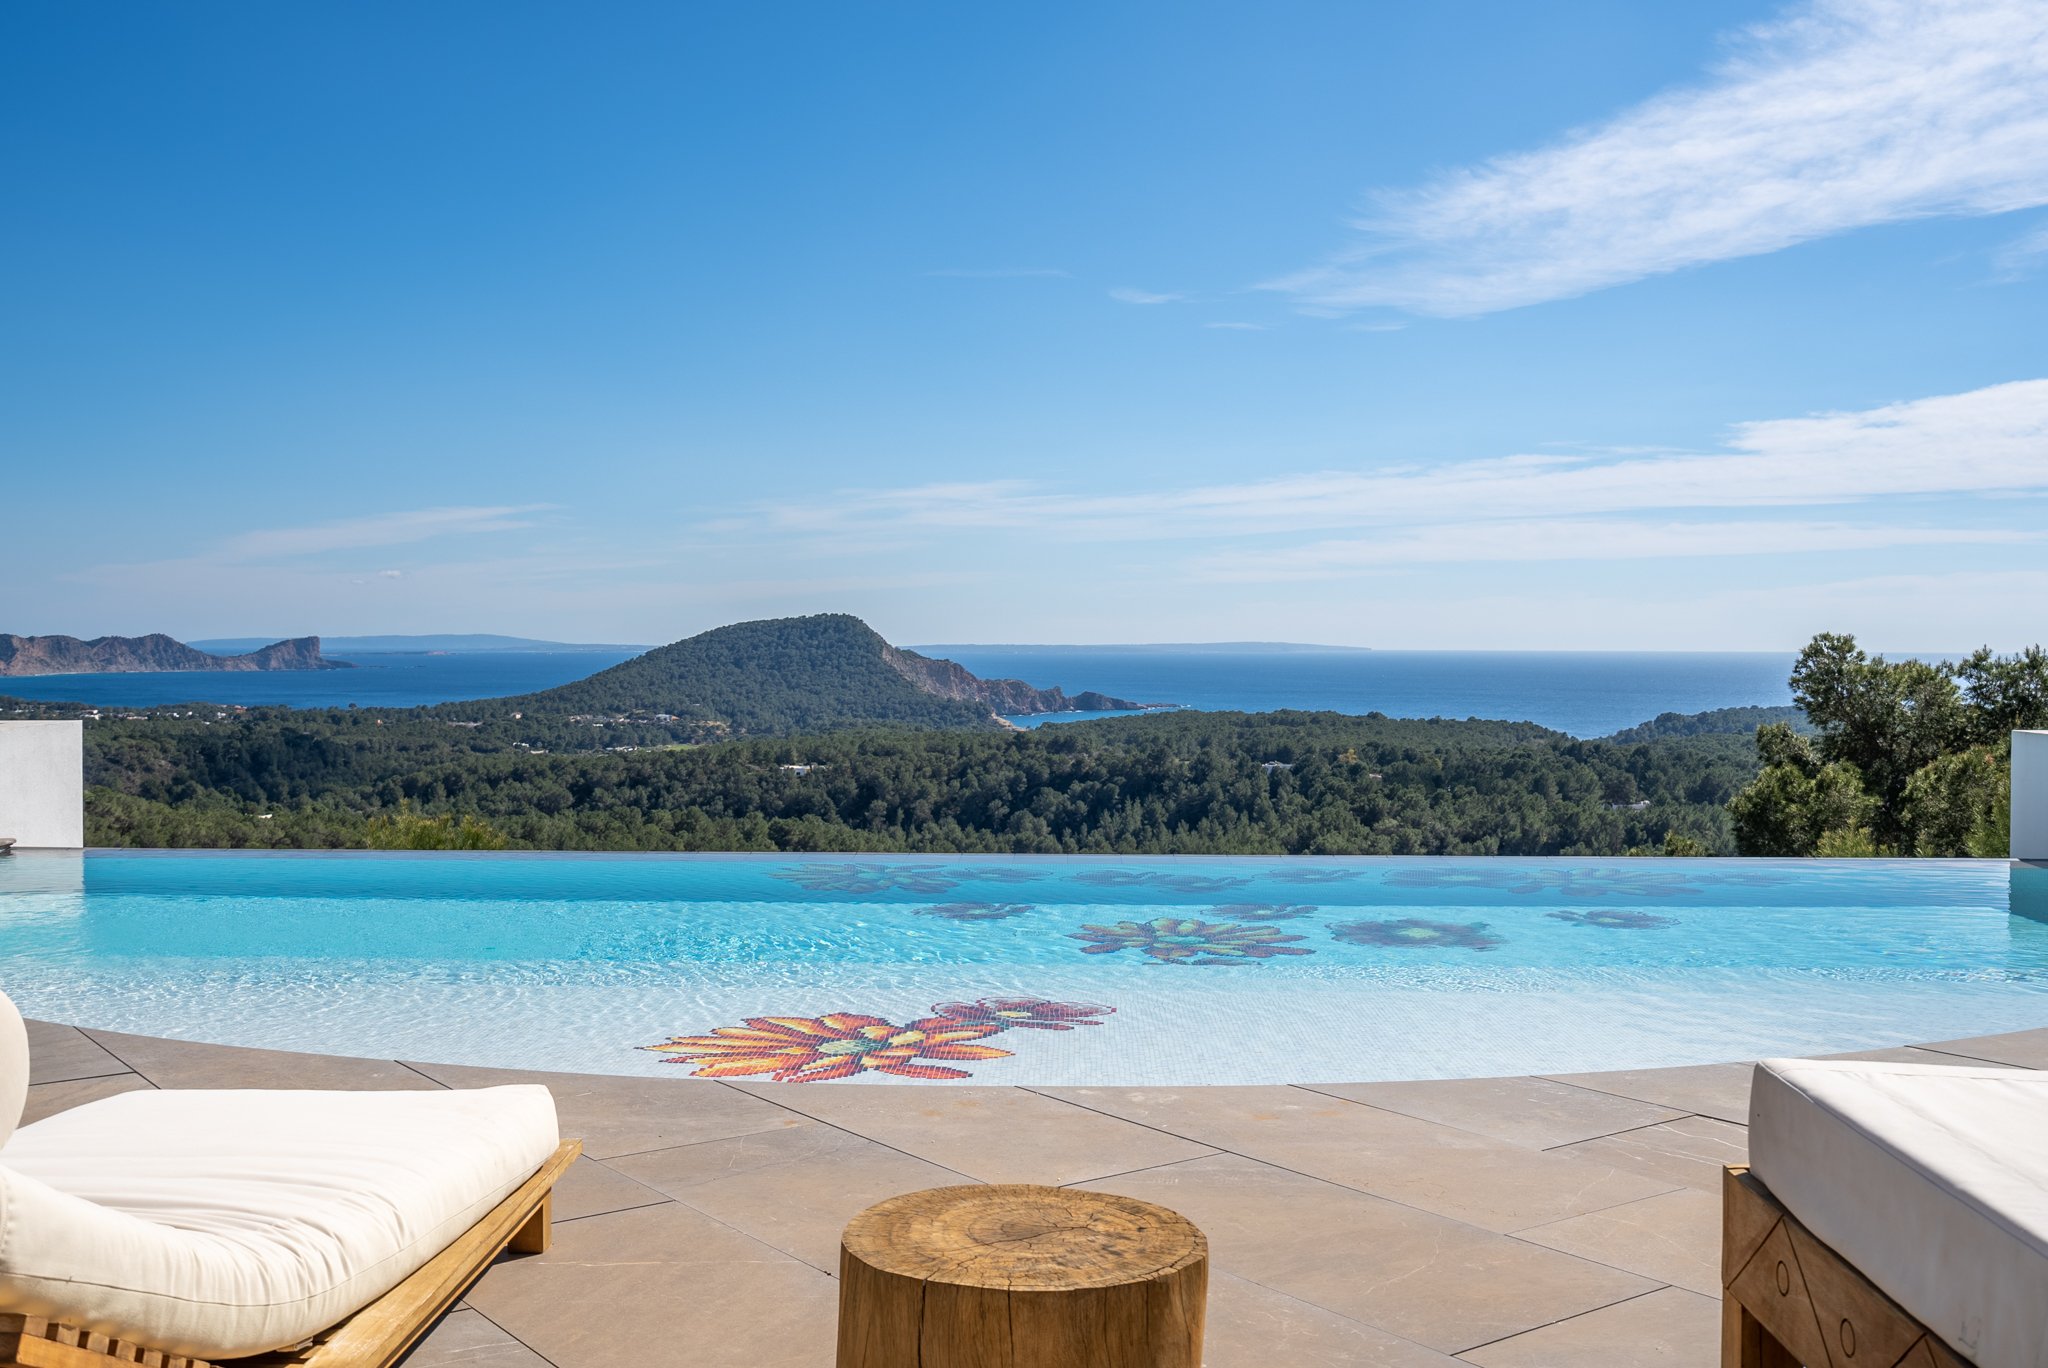 Francis York  Villa Adastra: Modern Mansion With Panoramic Island Views in Ibiza 57.jpg